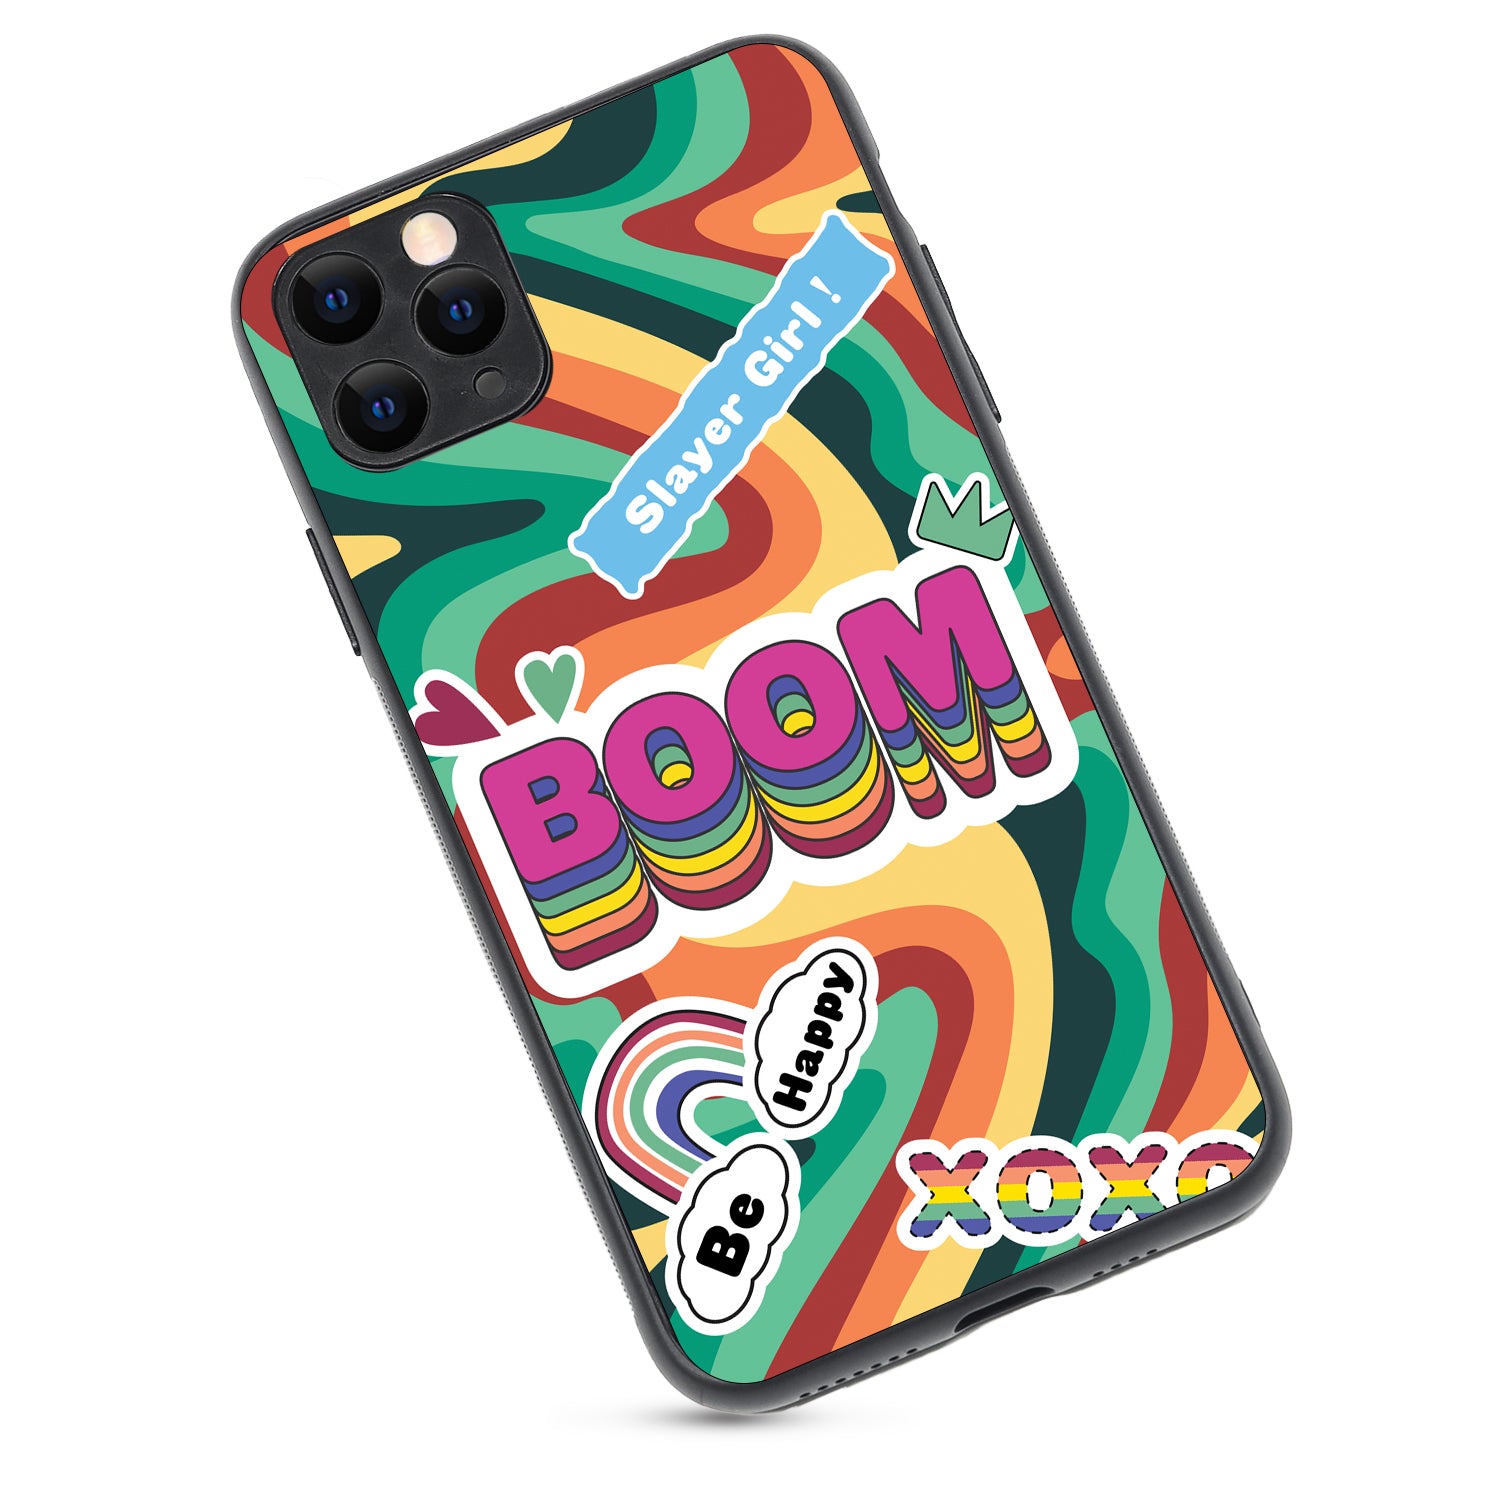 Boom Women Empowerment iPhone 11 Pro Max Case